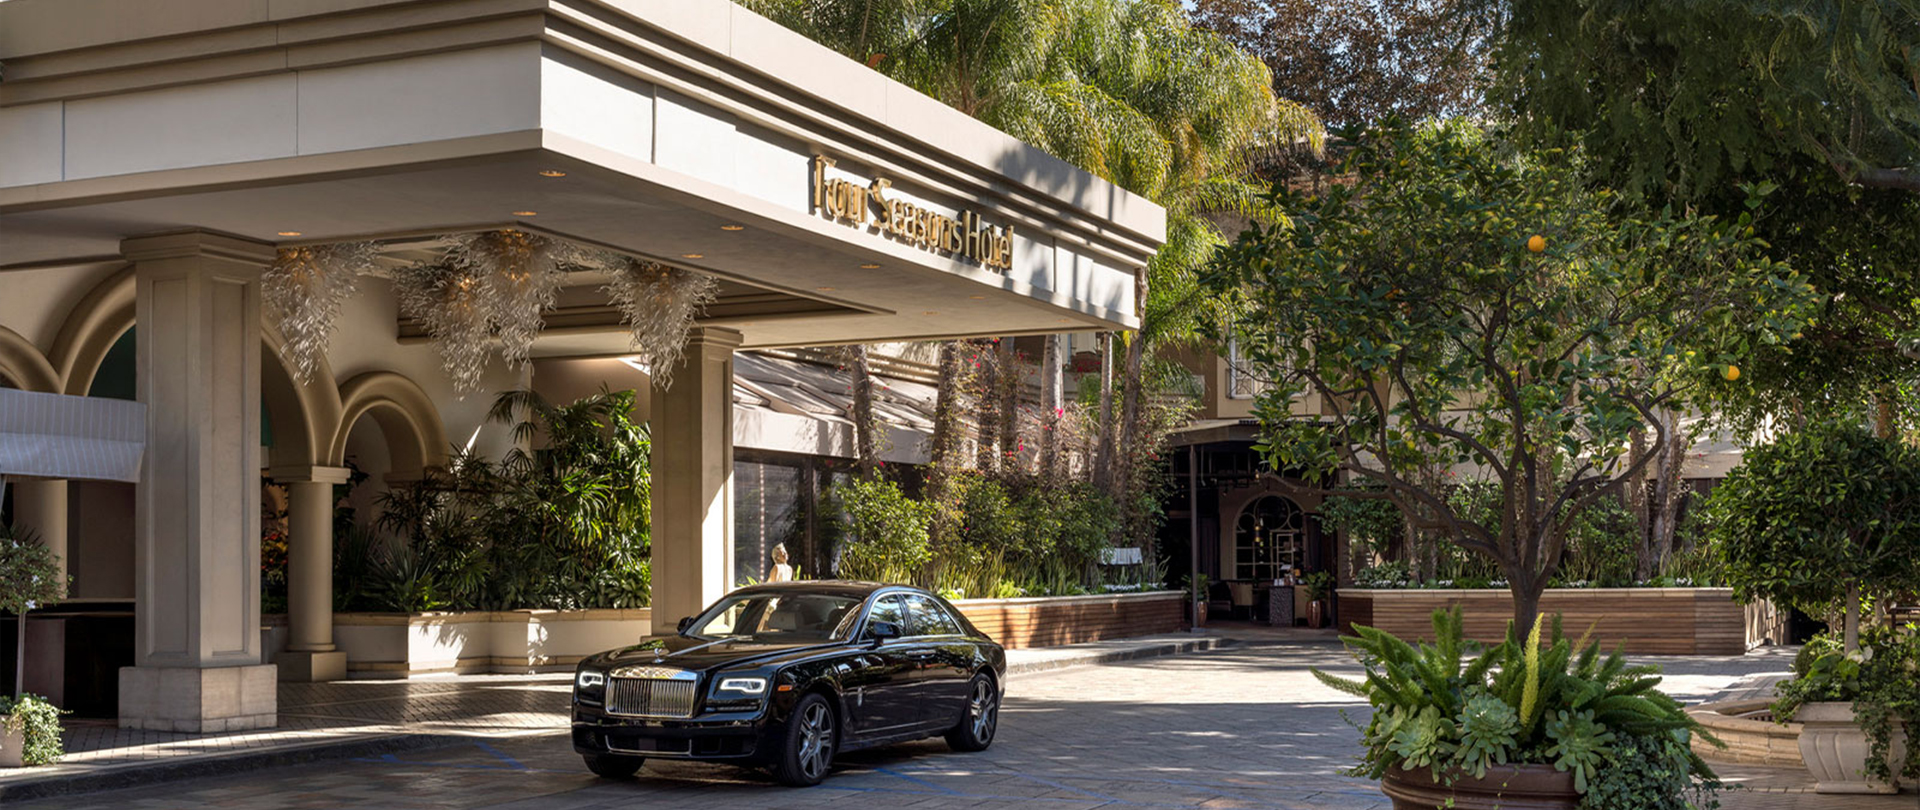 Four Seasons Hotel Los Angeles